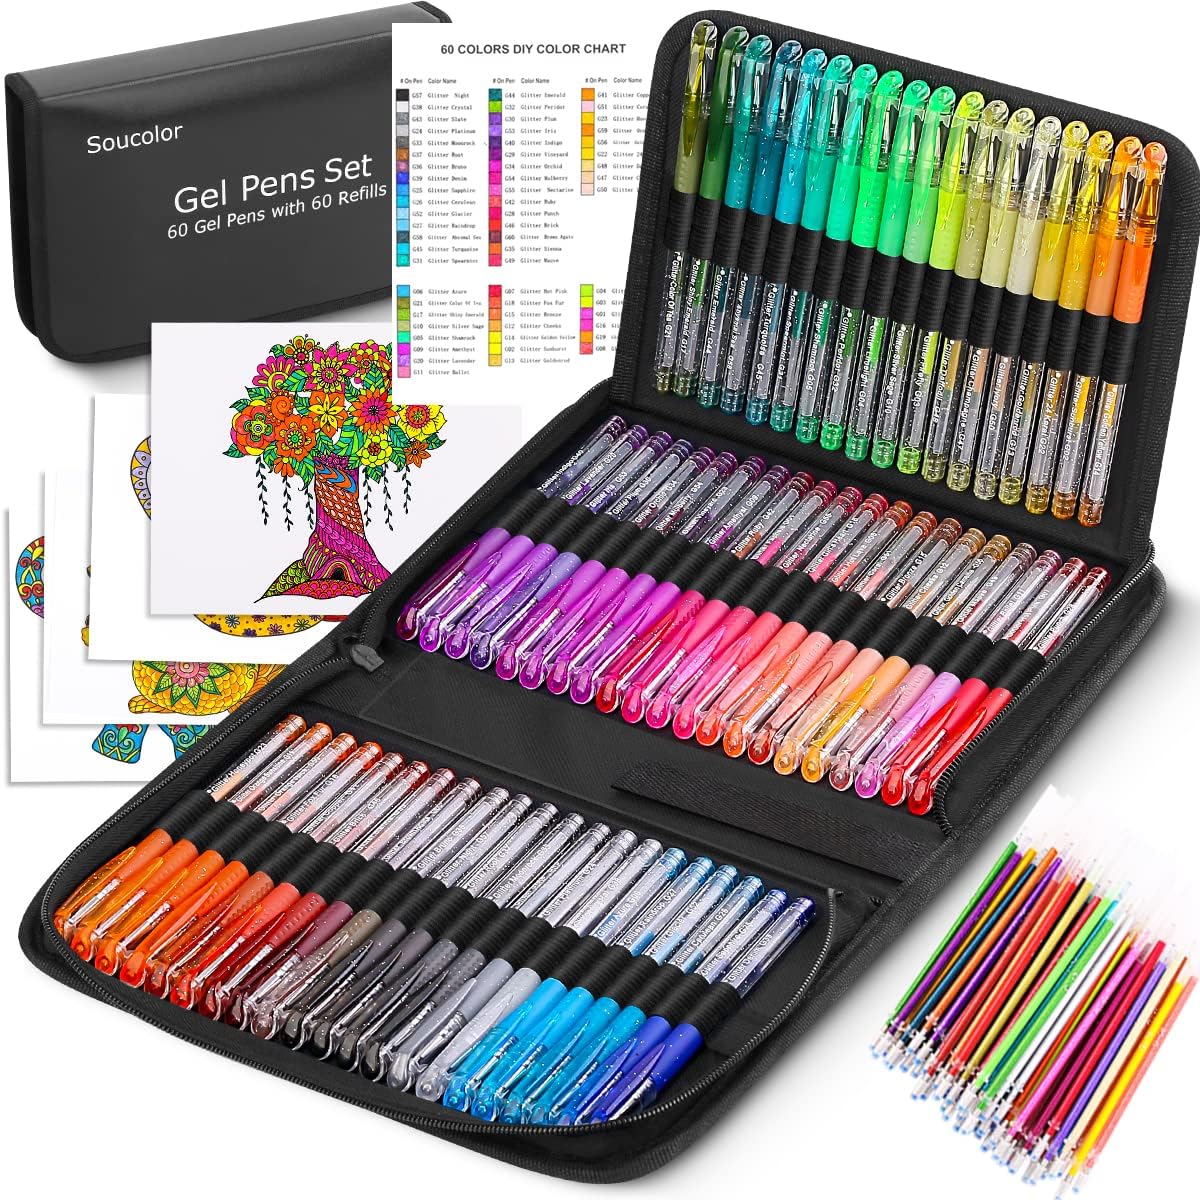 Soucolor Glitter Gel Pens for Adult Coloring Books